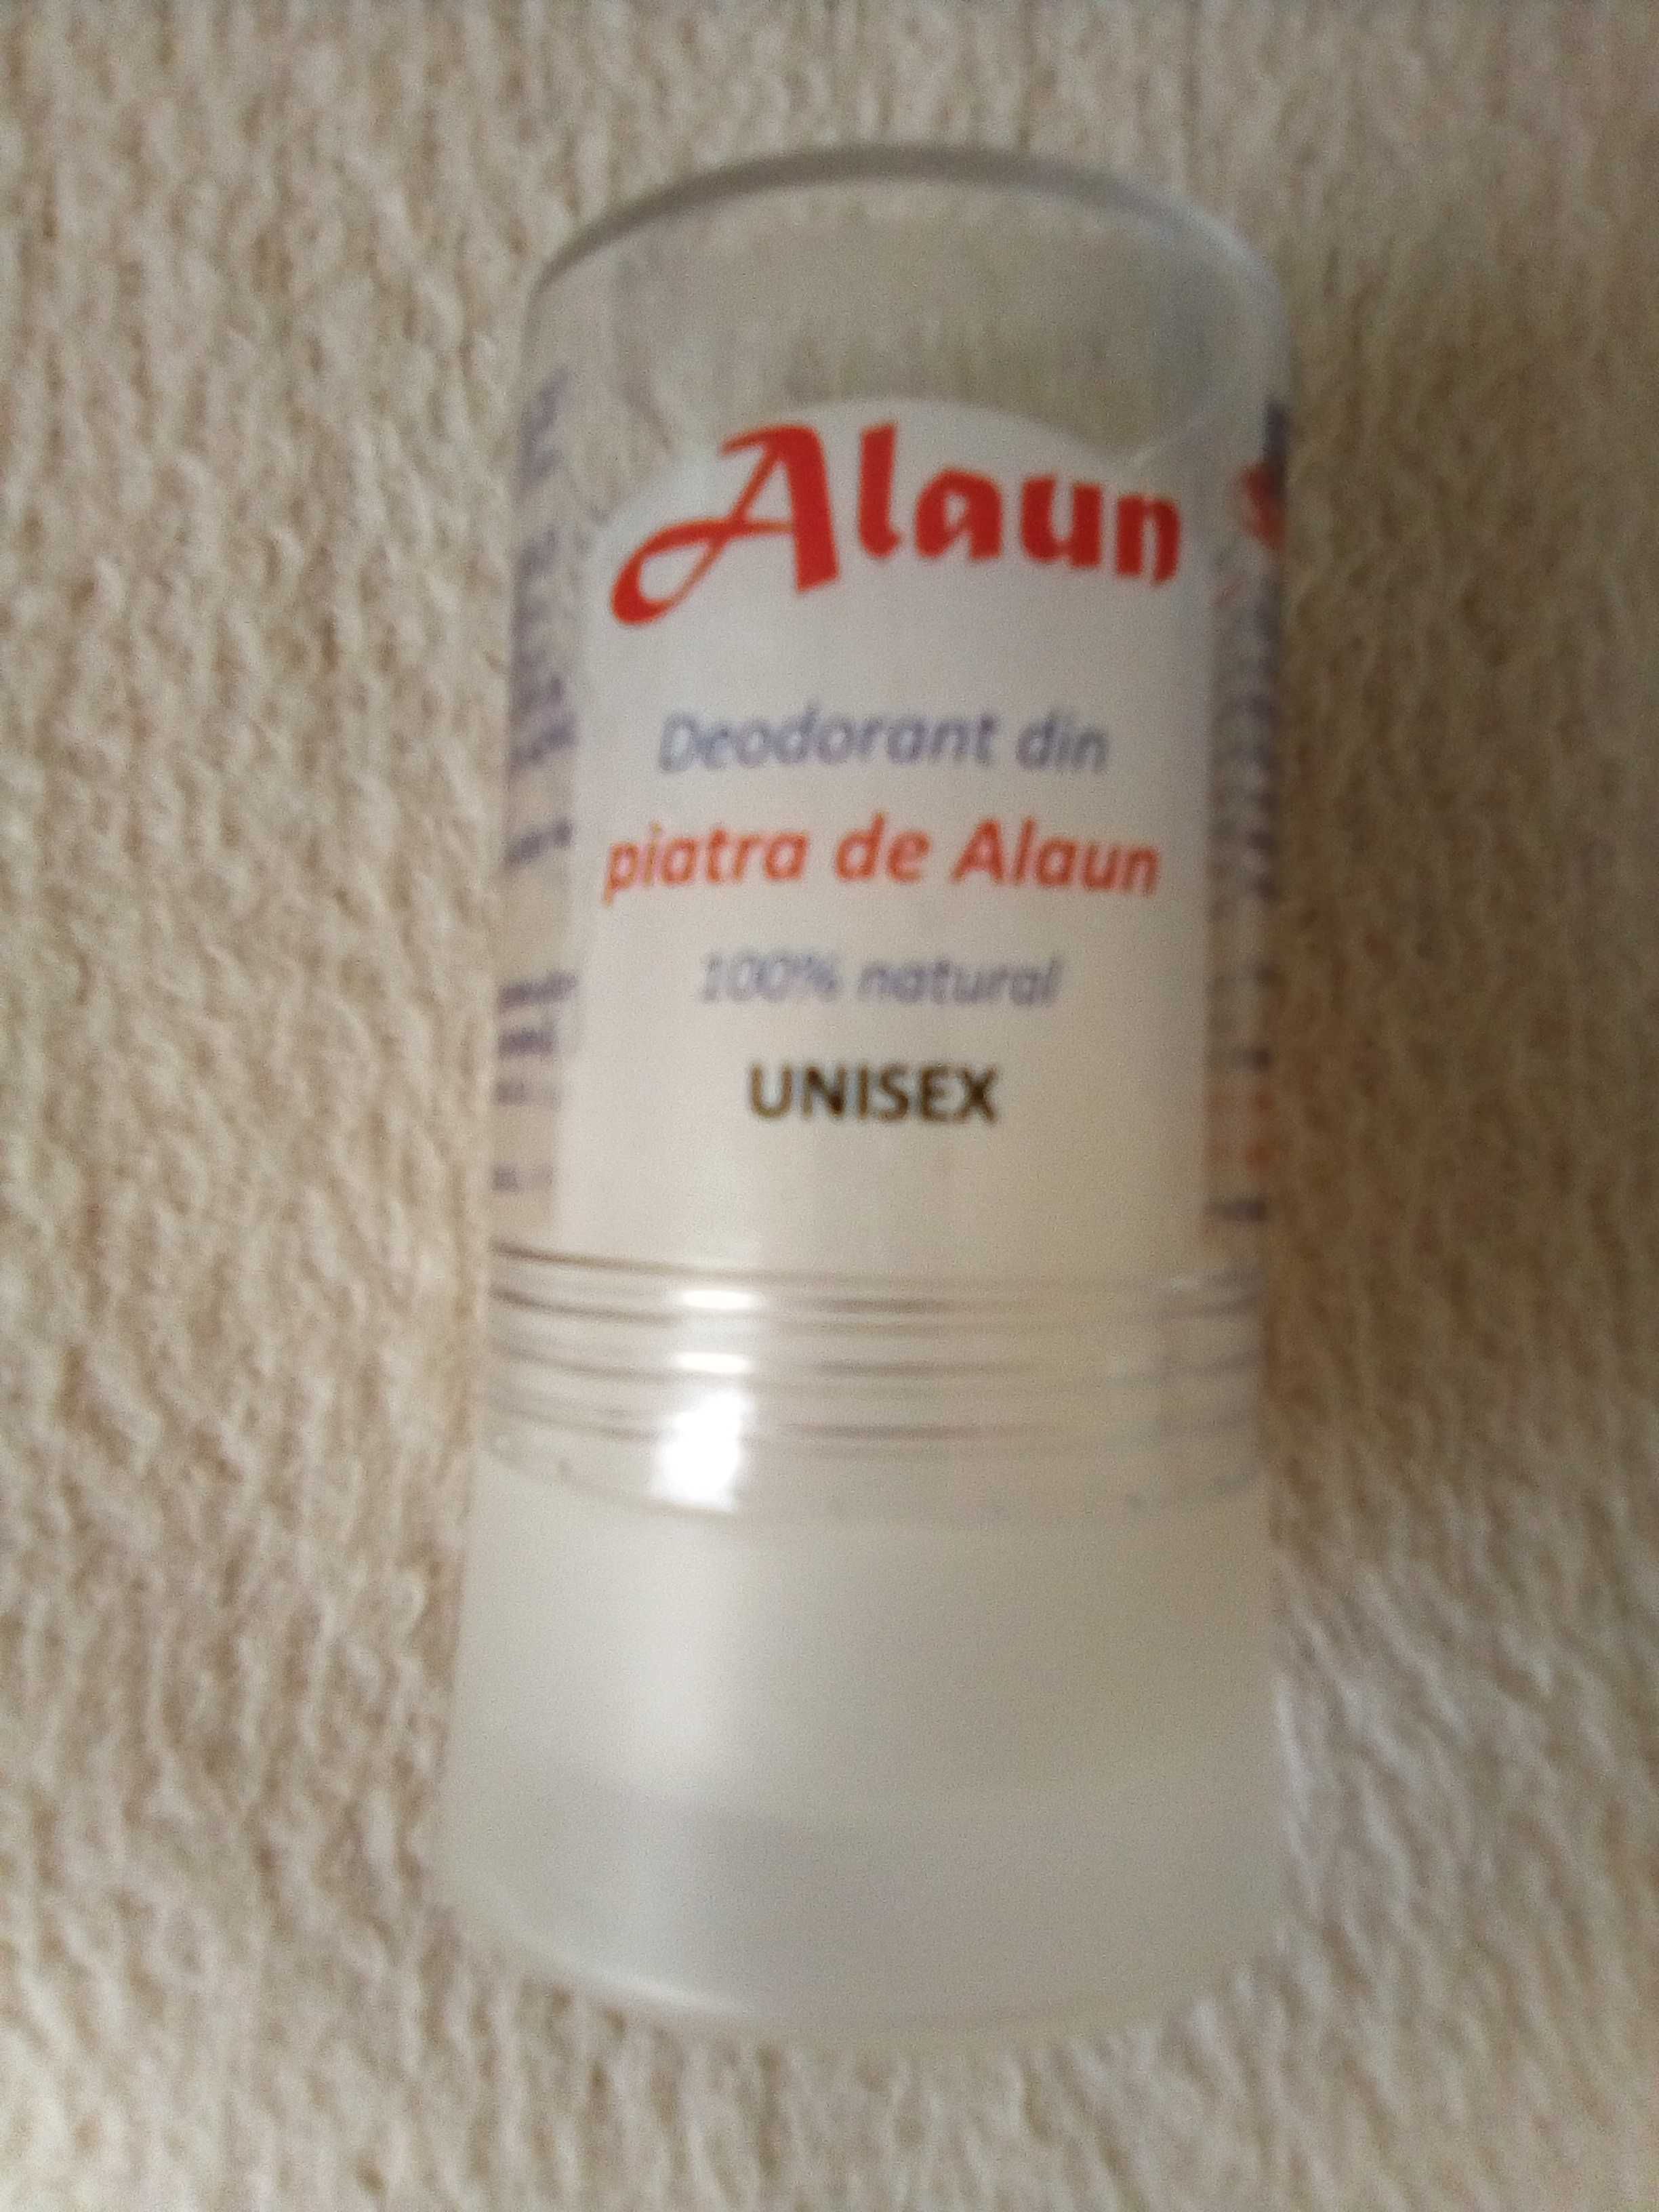 Piatra alaun unisex la doar 19 ron deodorant natural